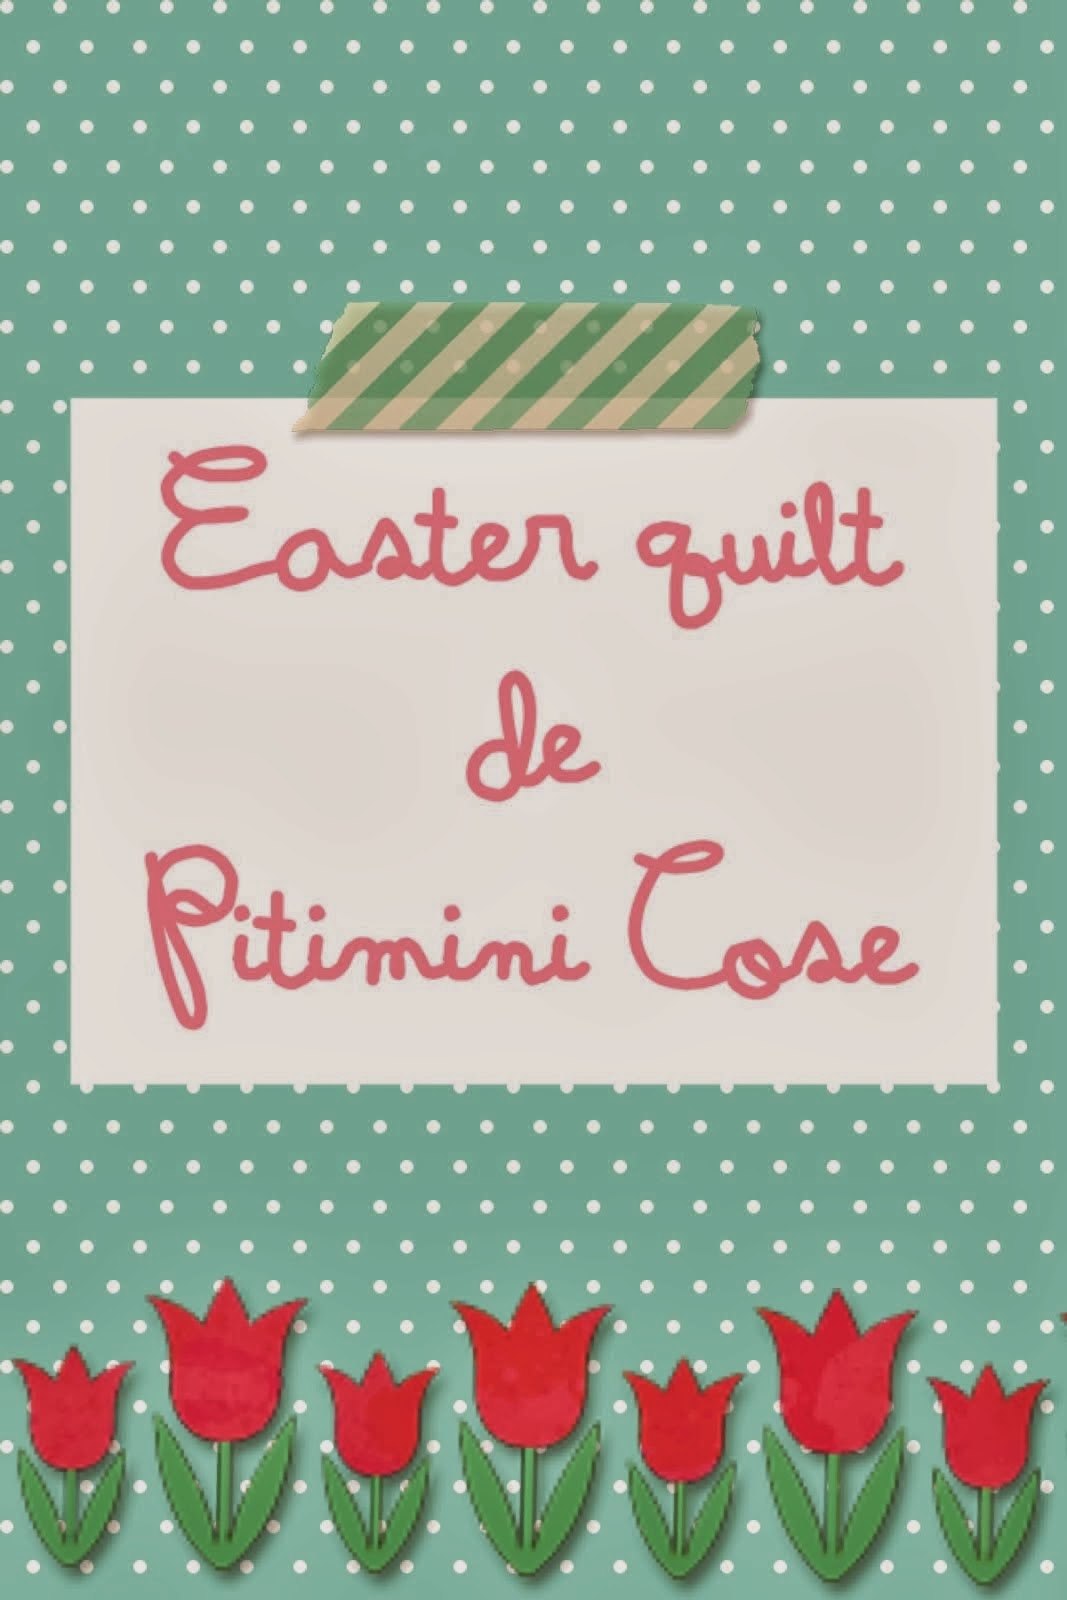 http://pitiminicose.blogspot.com.es/2014/02/juego-sorteo-easter-quilt.html